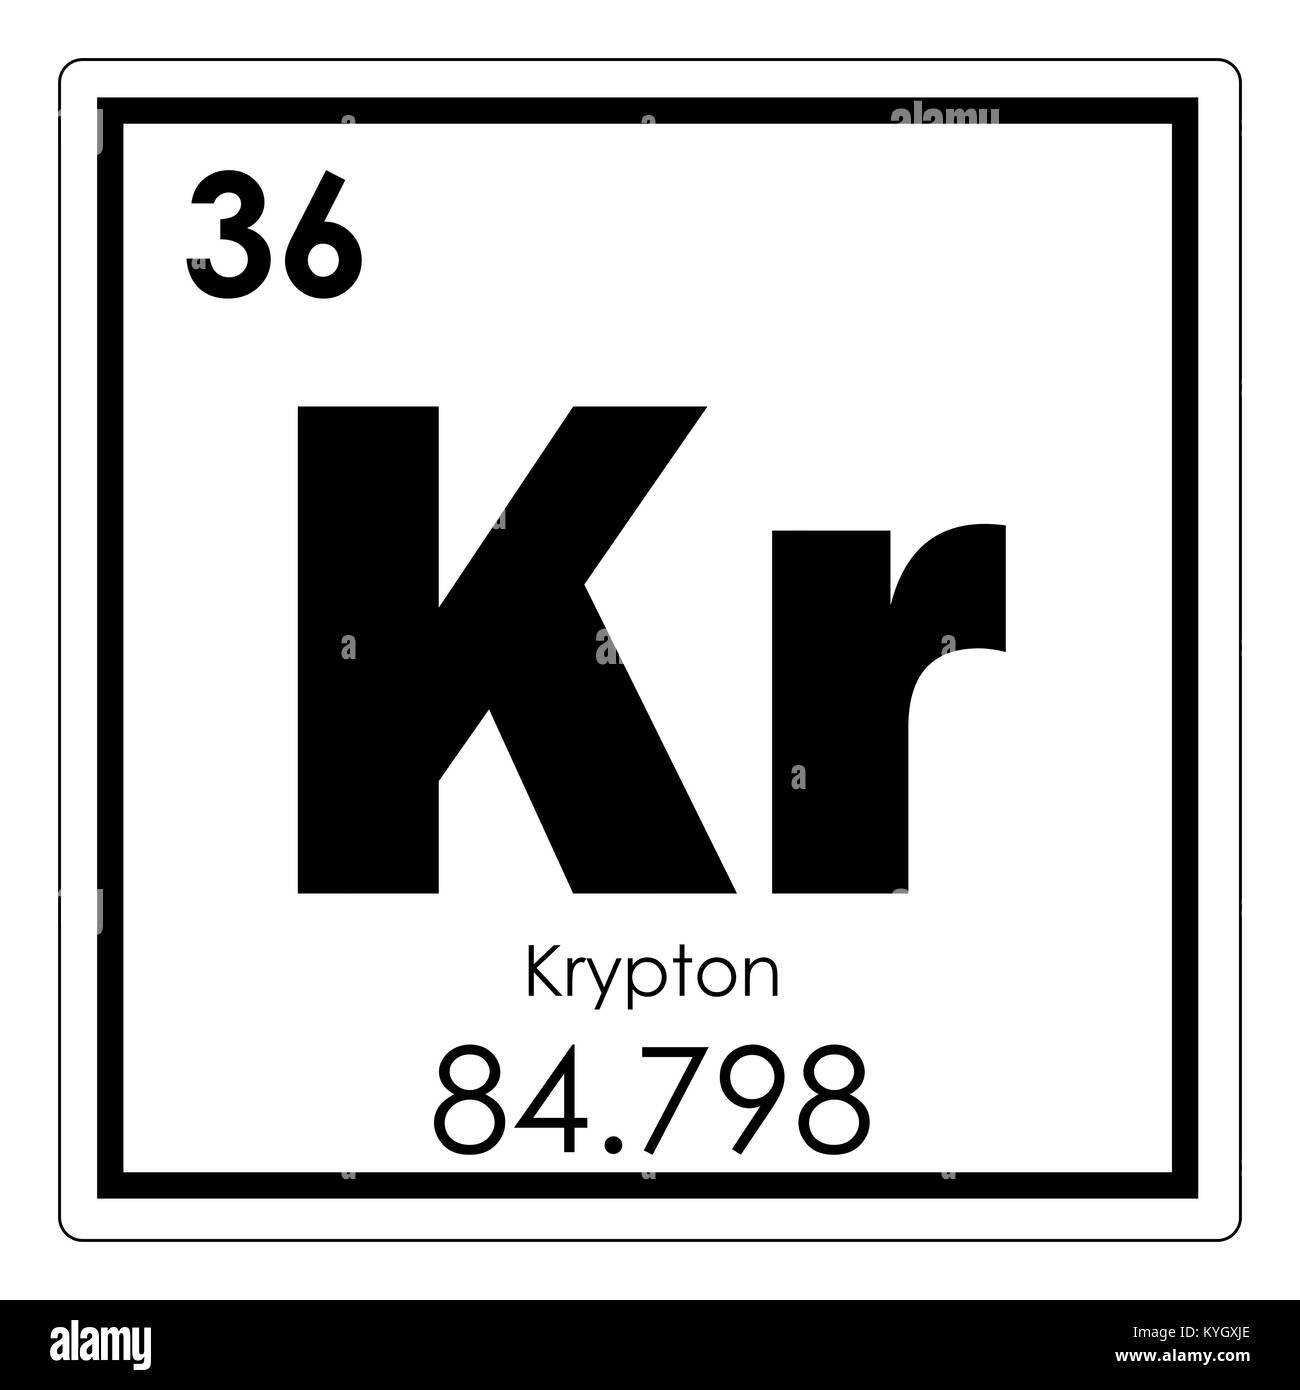 Krypton Chemical Element Periodic Table Science Symbol Stock Photo Alamy